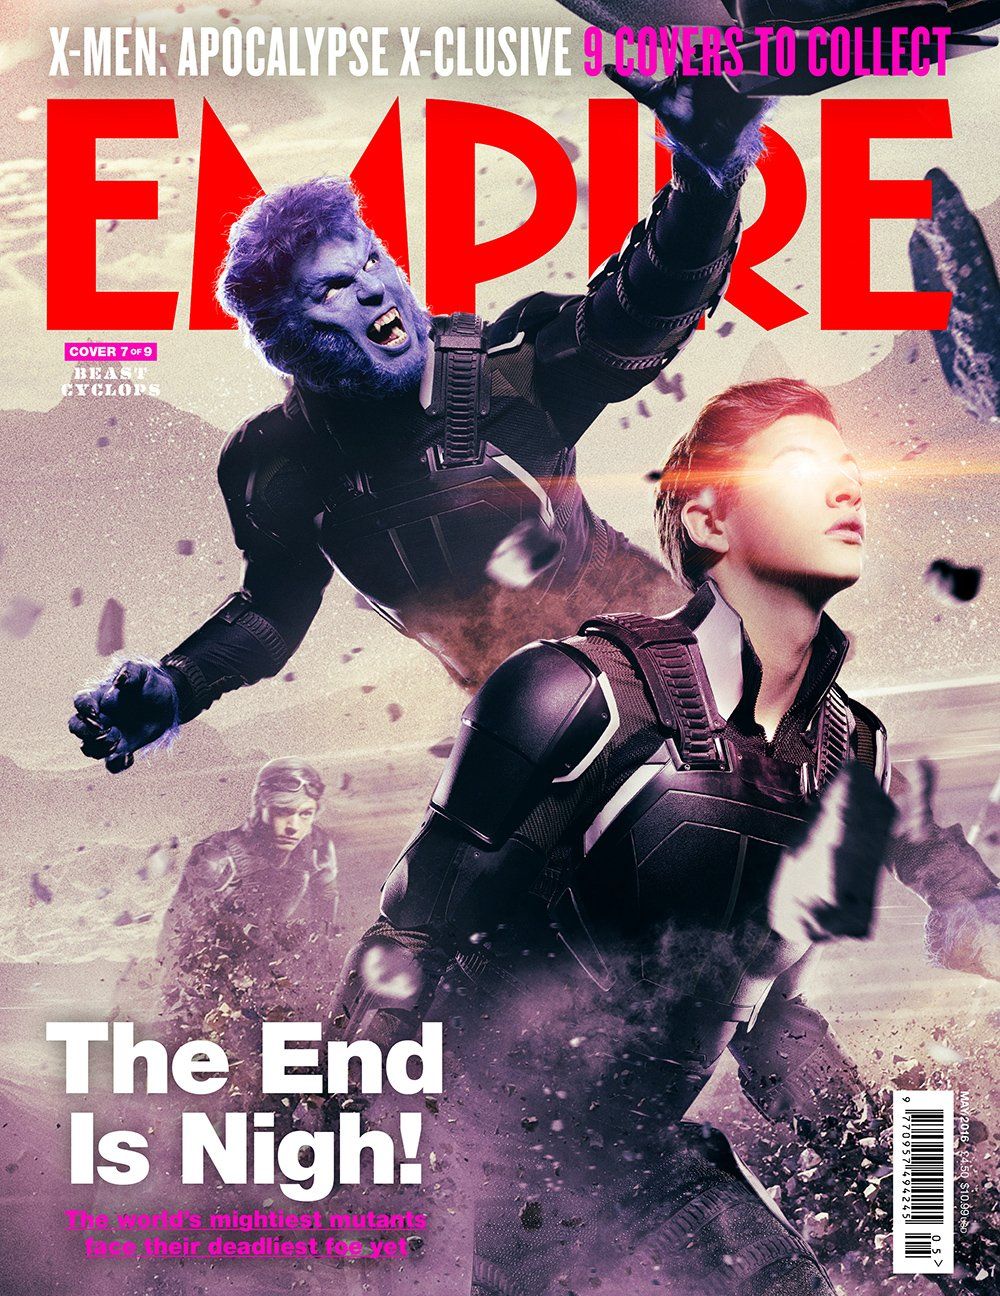 X-Men: Apocalypse magazine cover - Beast and Cyclops